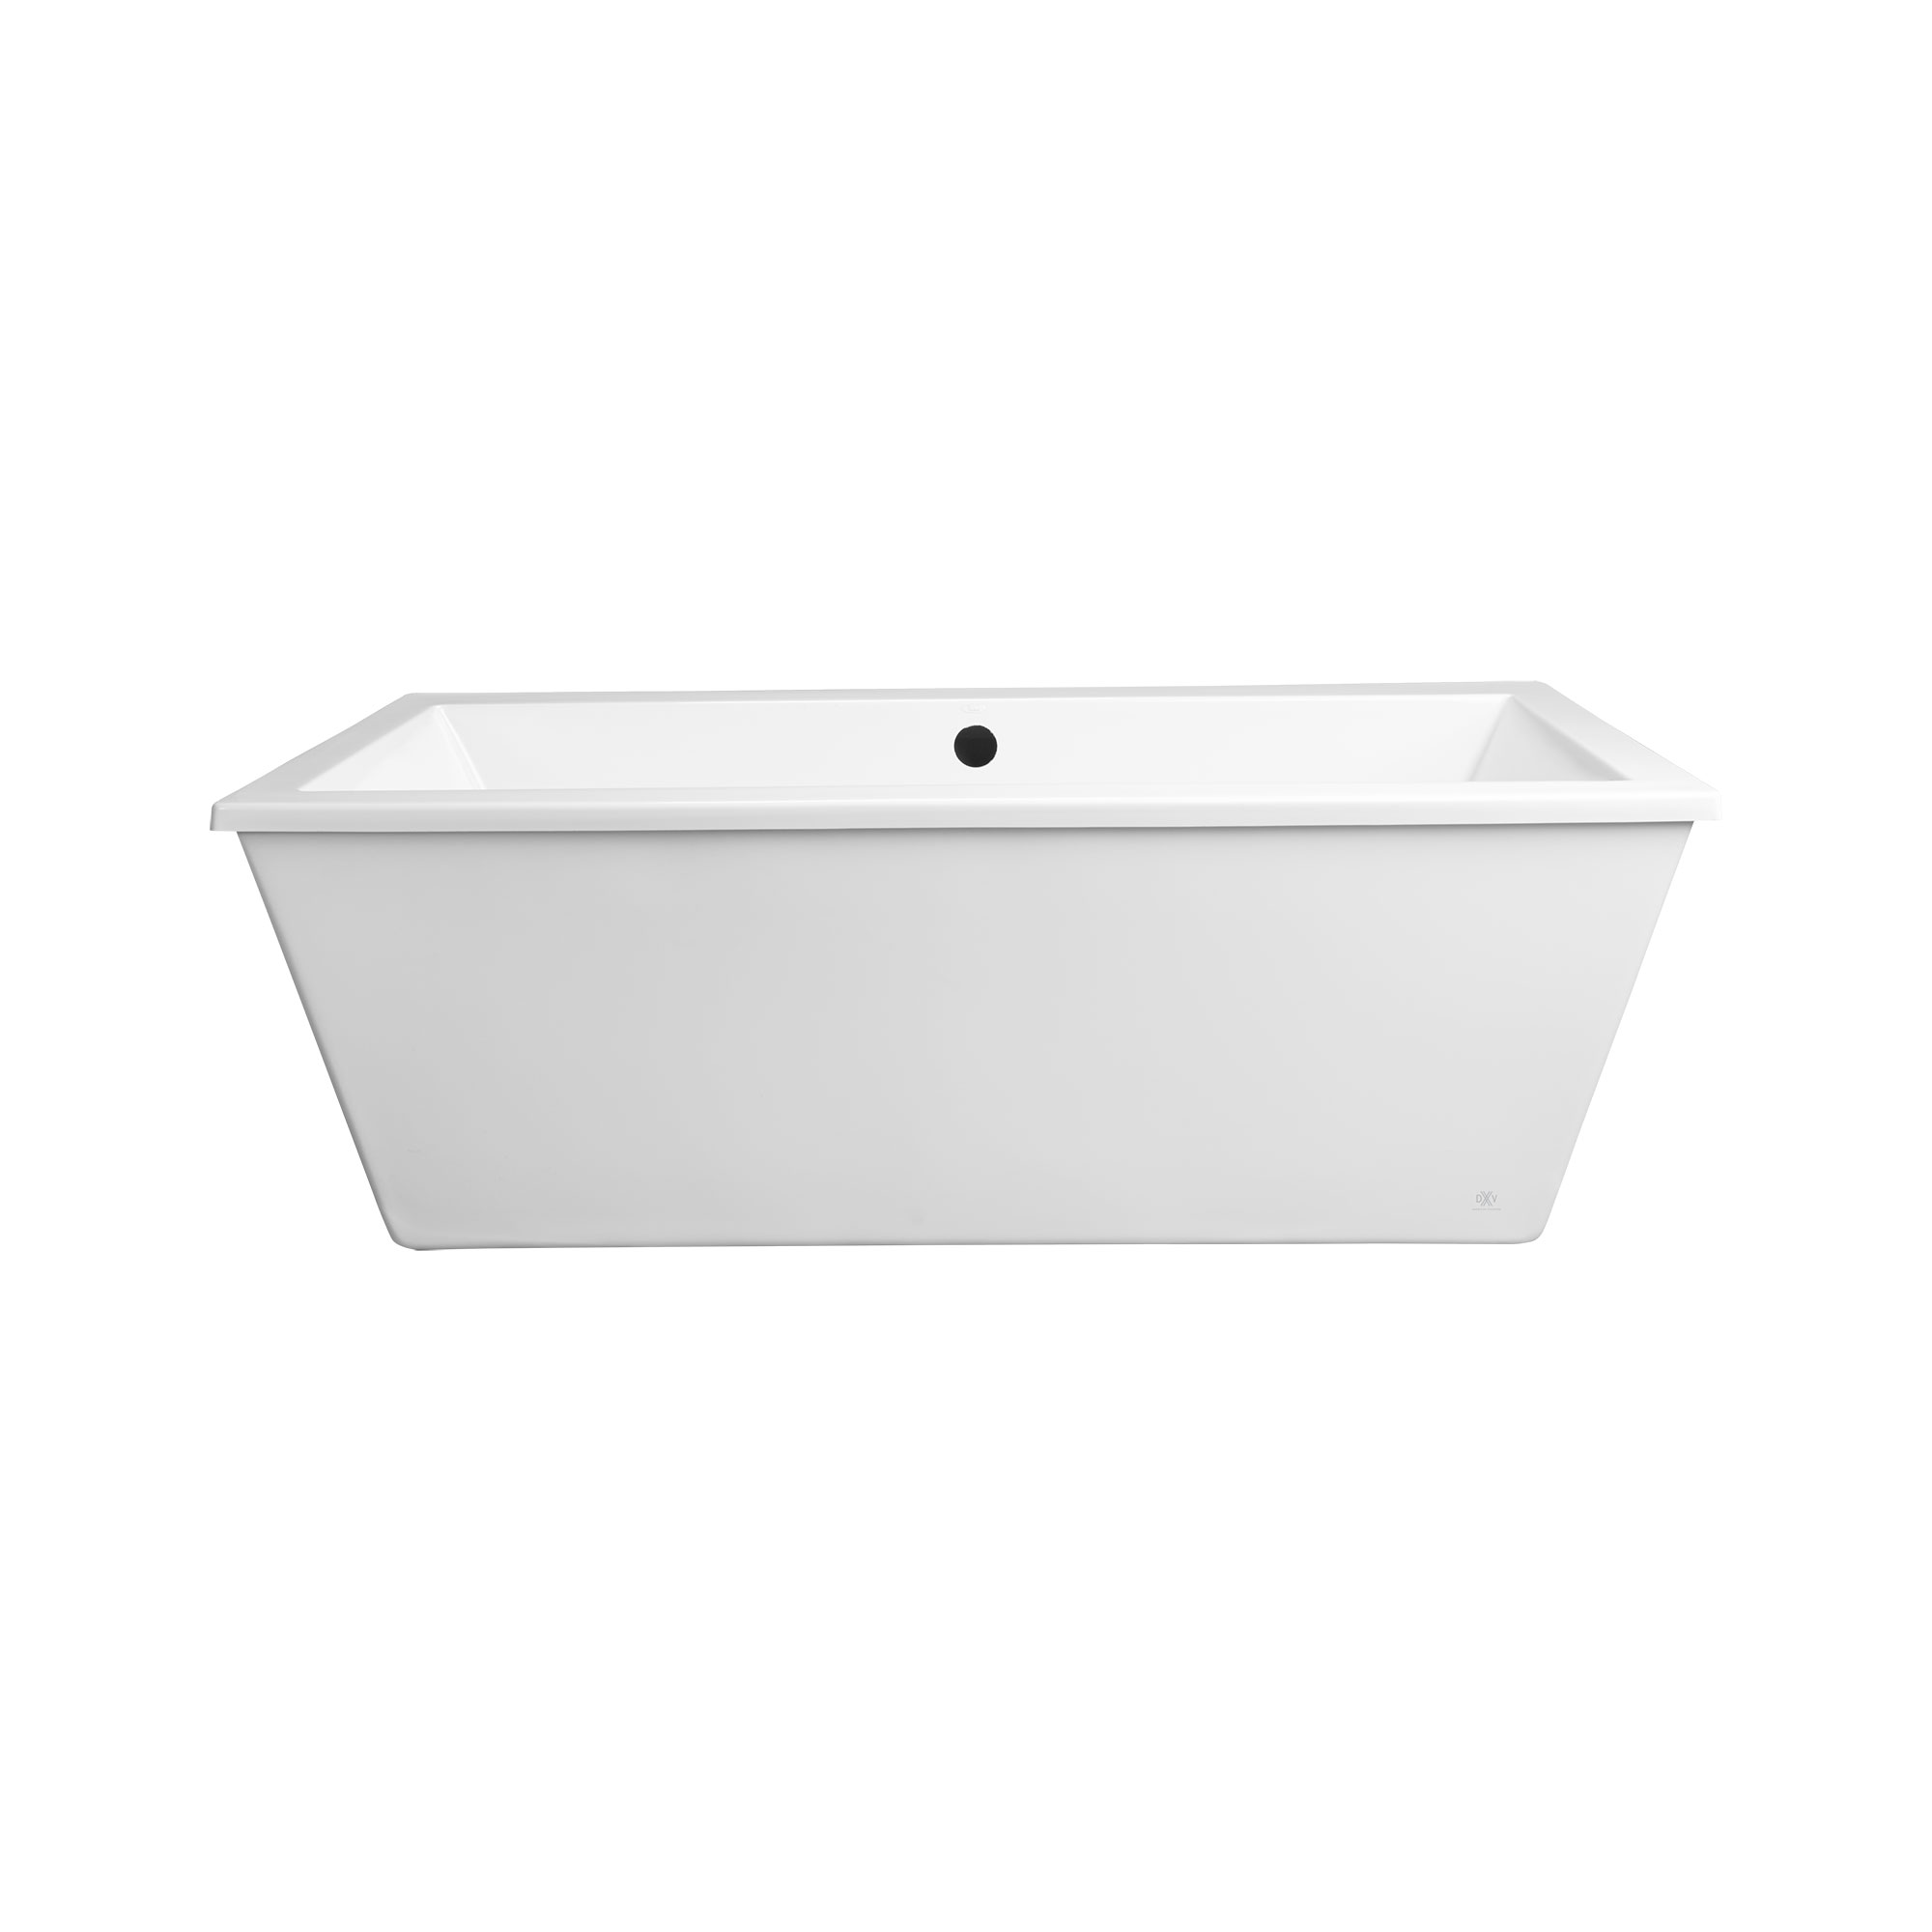 Cossu® 66 in. x 36 in. Freestanding Bathtub